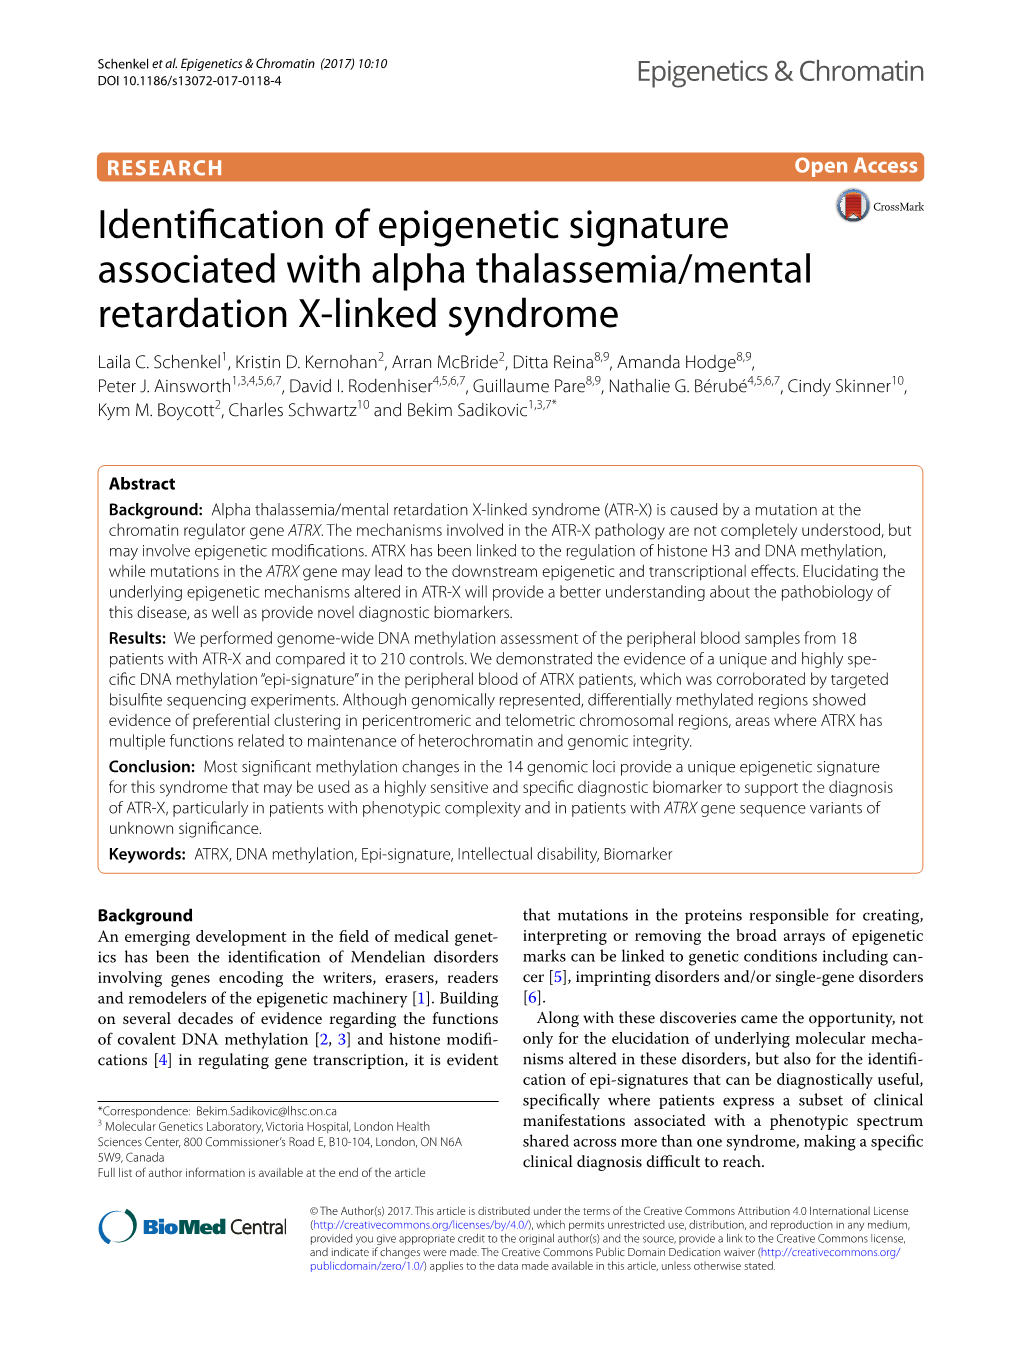 Identification of Epigenetic Signature Associated with Alpha Thalassemia/Mental Retardation X‑Linked Syndrome Laila C